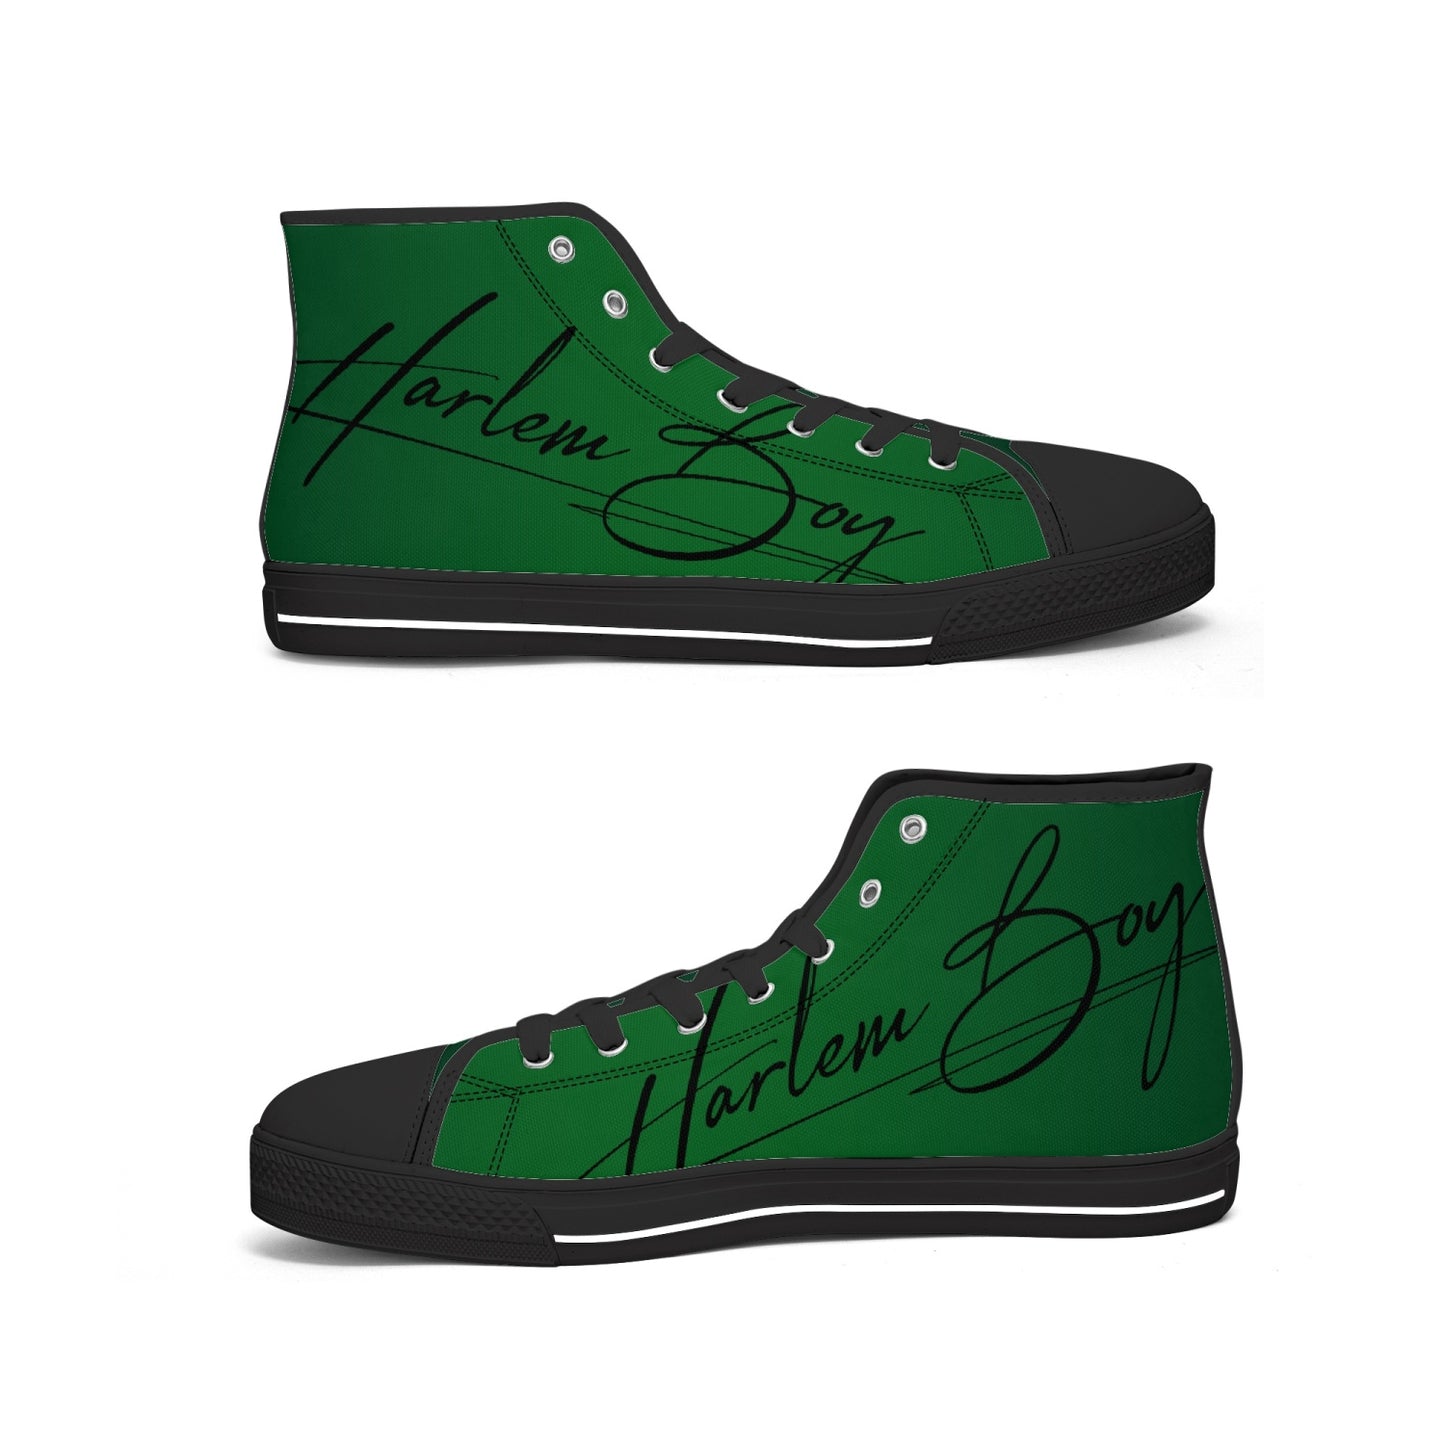 Harlem Boy "Lenox Ave" Unisex Classic High Tops - Emerald (Black or White Sole)